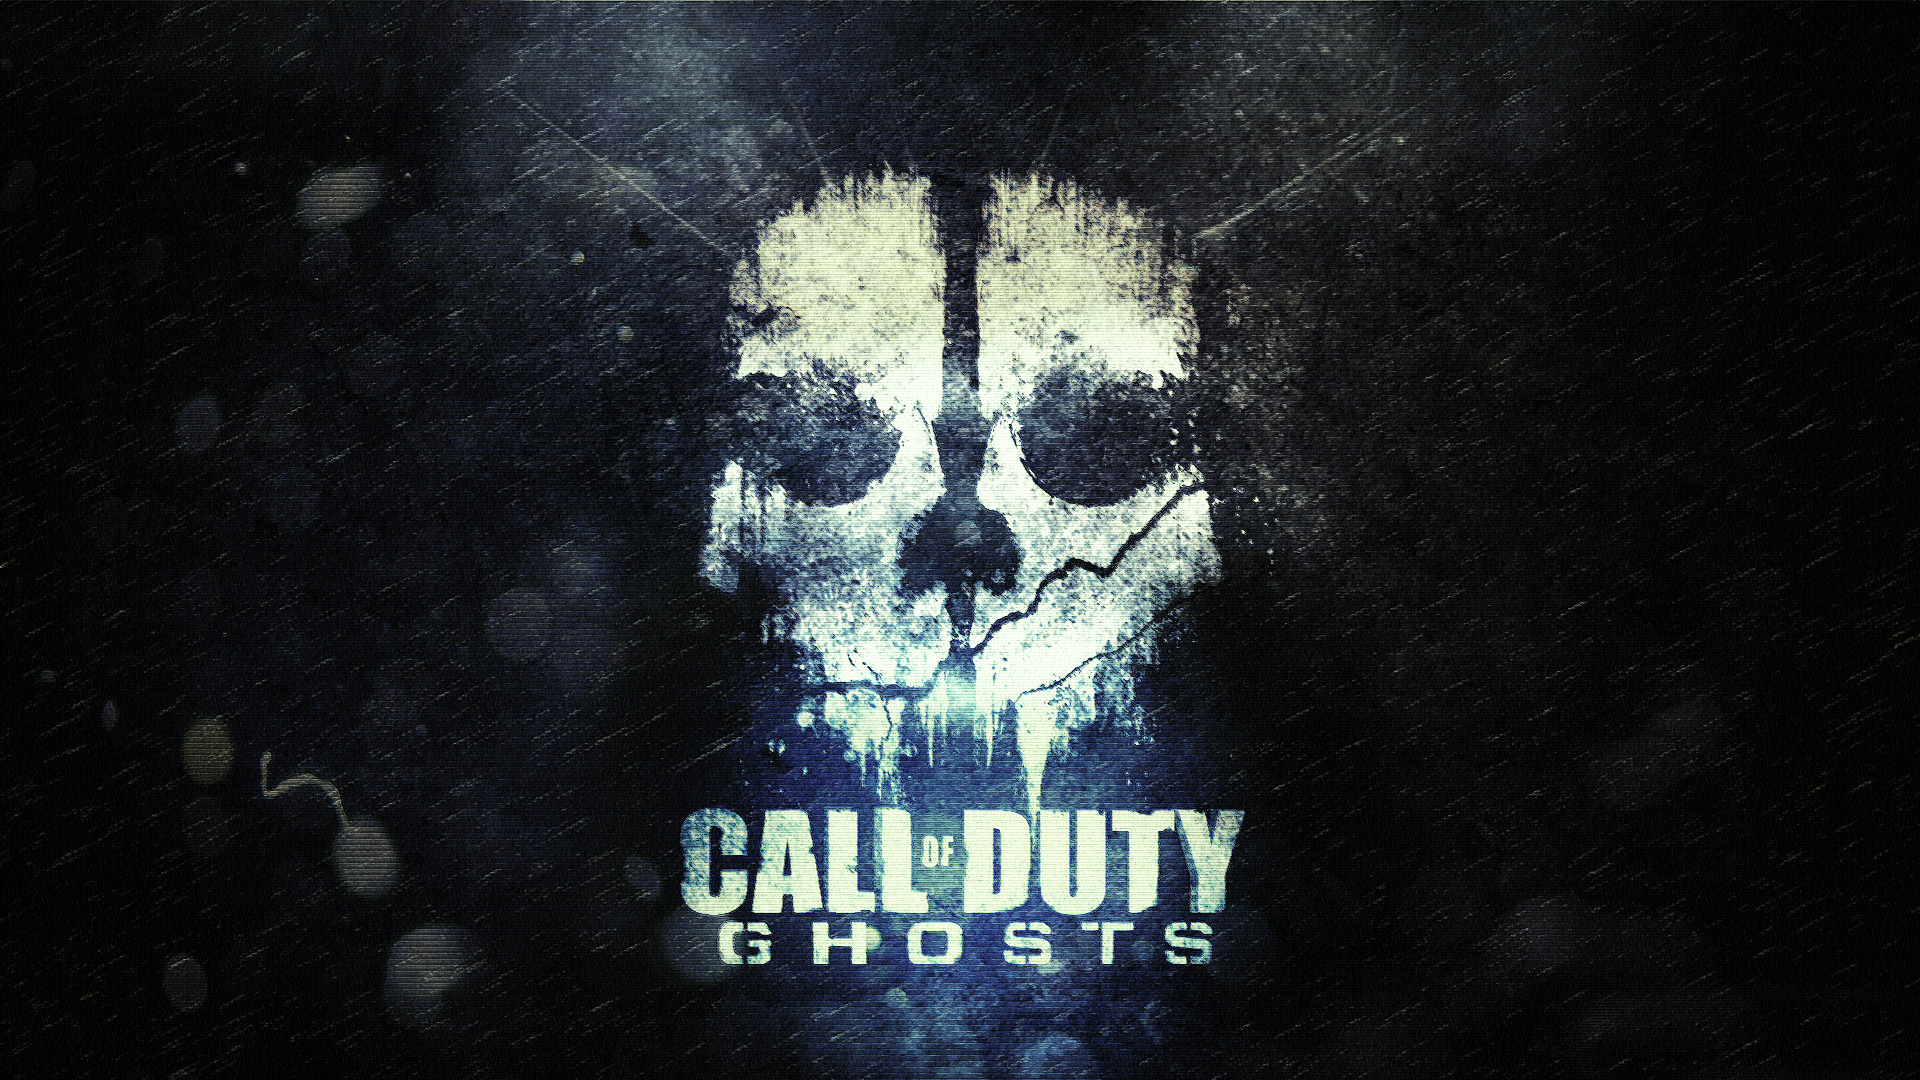 aw wallpaper Call of Duty Ghosts walkthrough